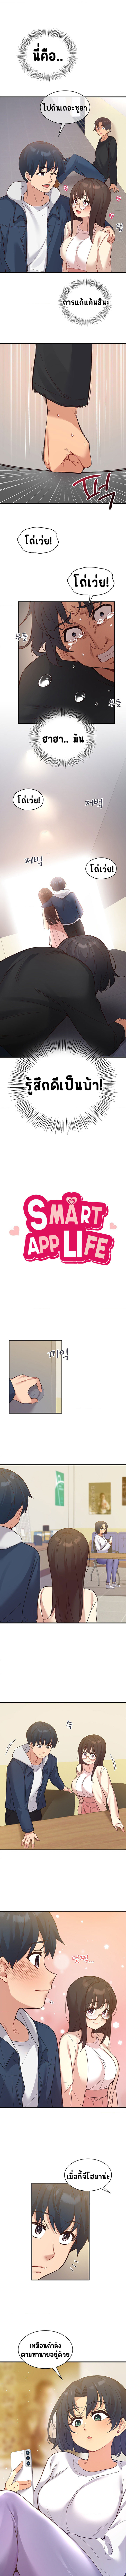 Smart App Life 15 (1)